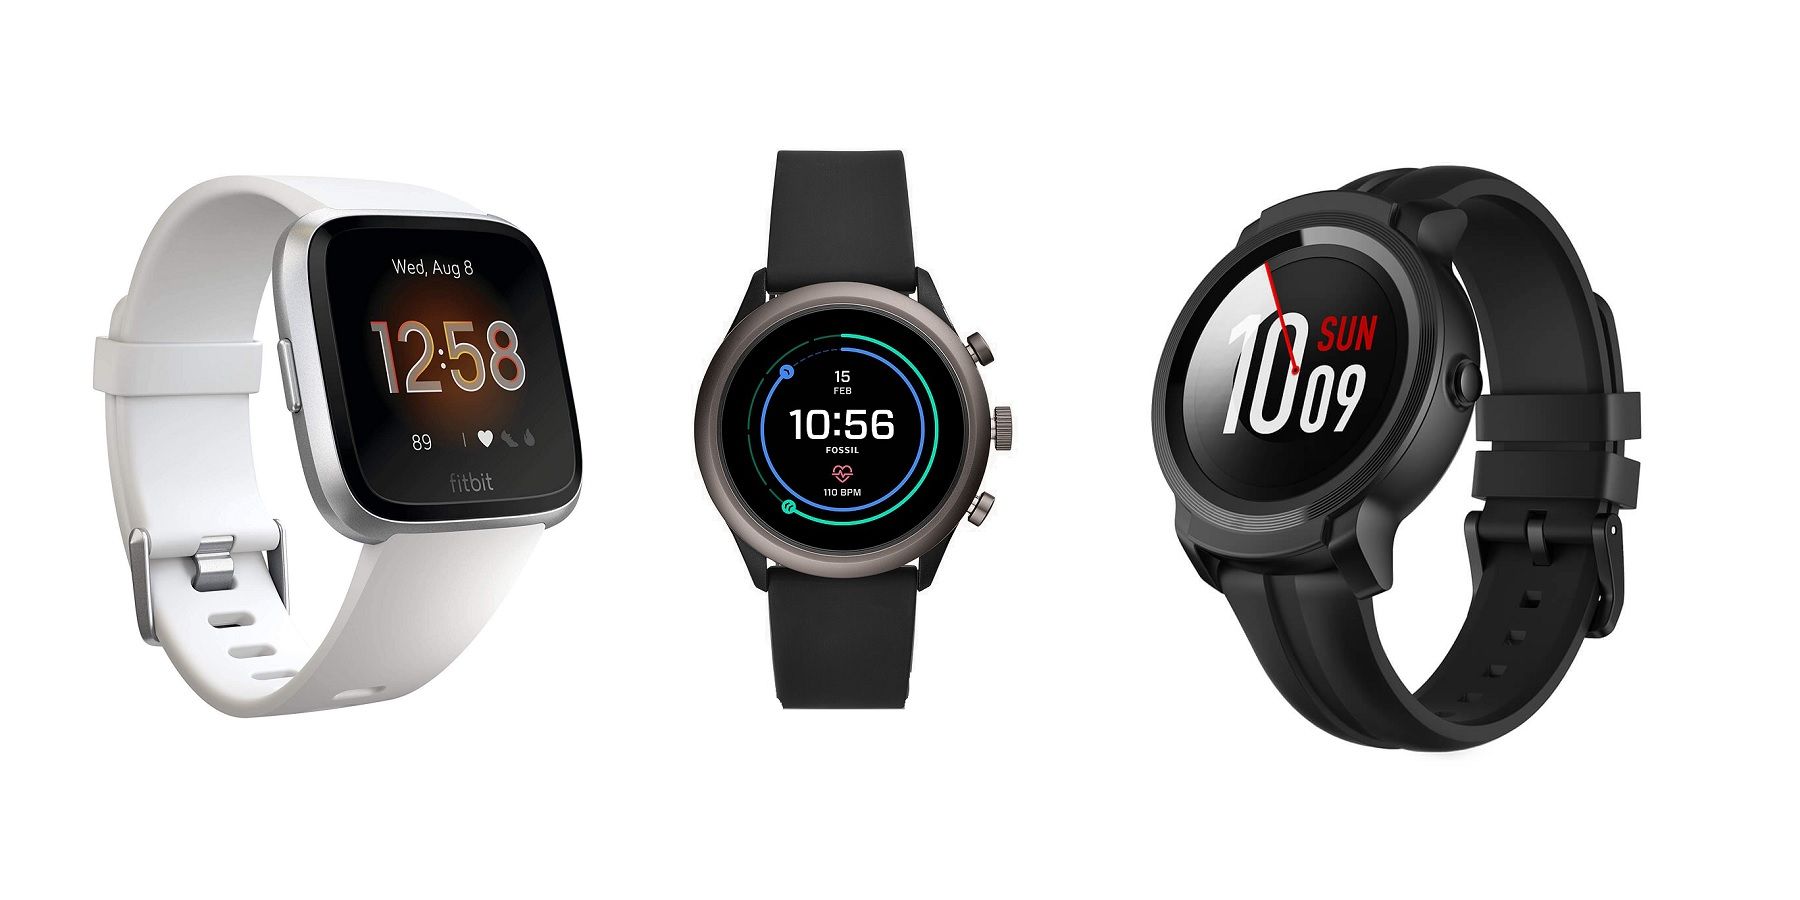 Budget smartwatches don't get better than the Garmin Vivoactive 4